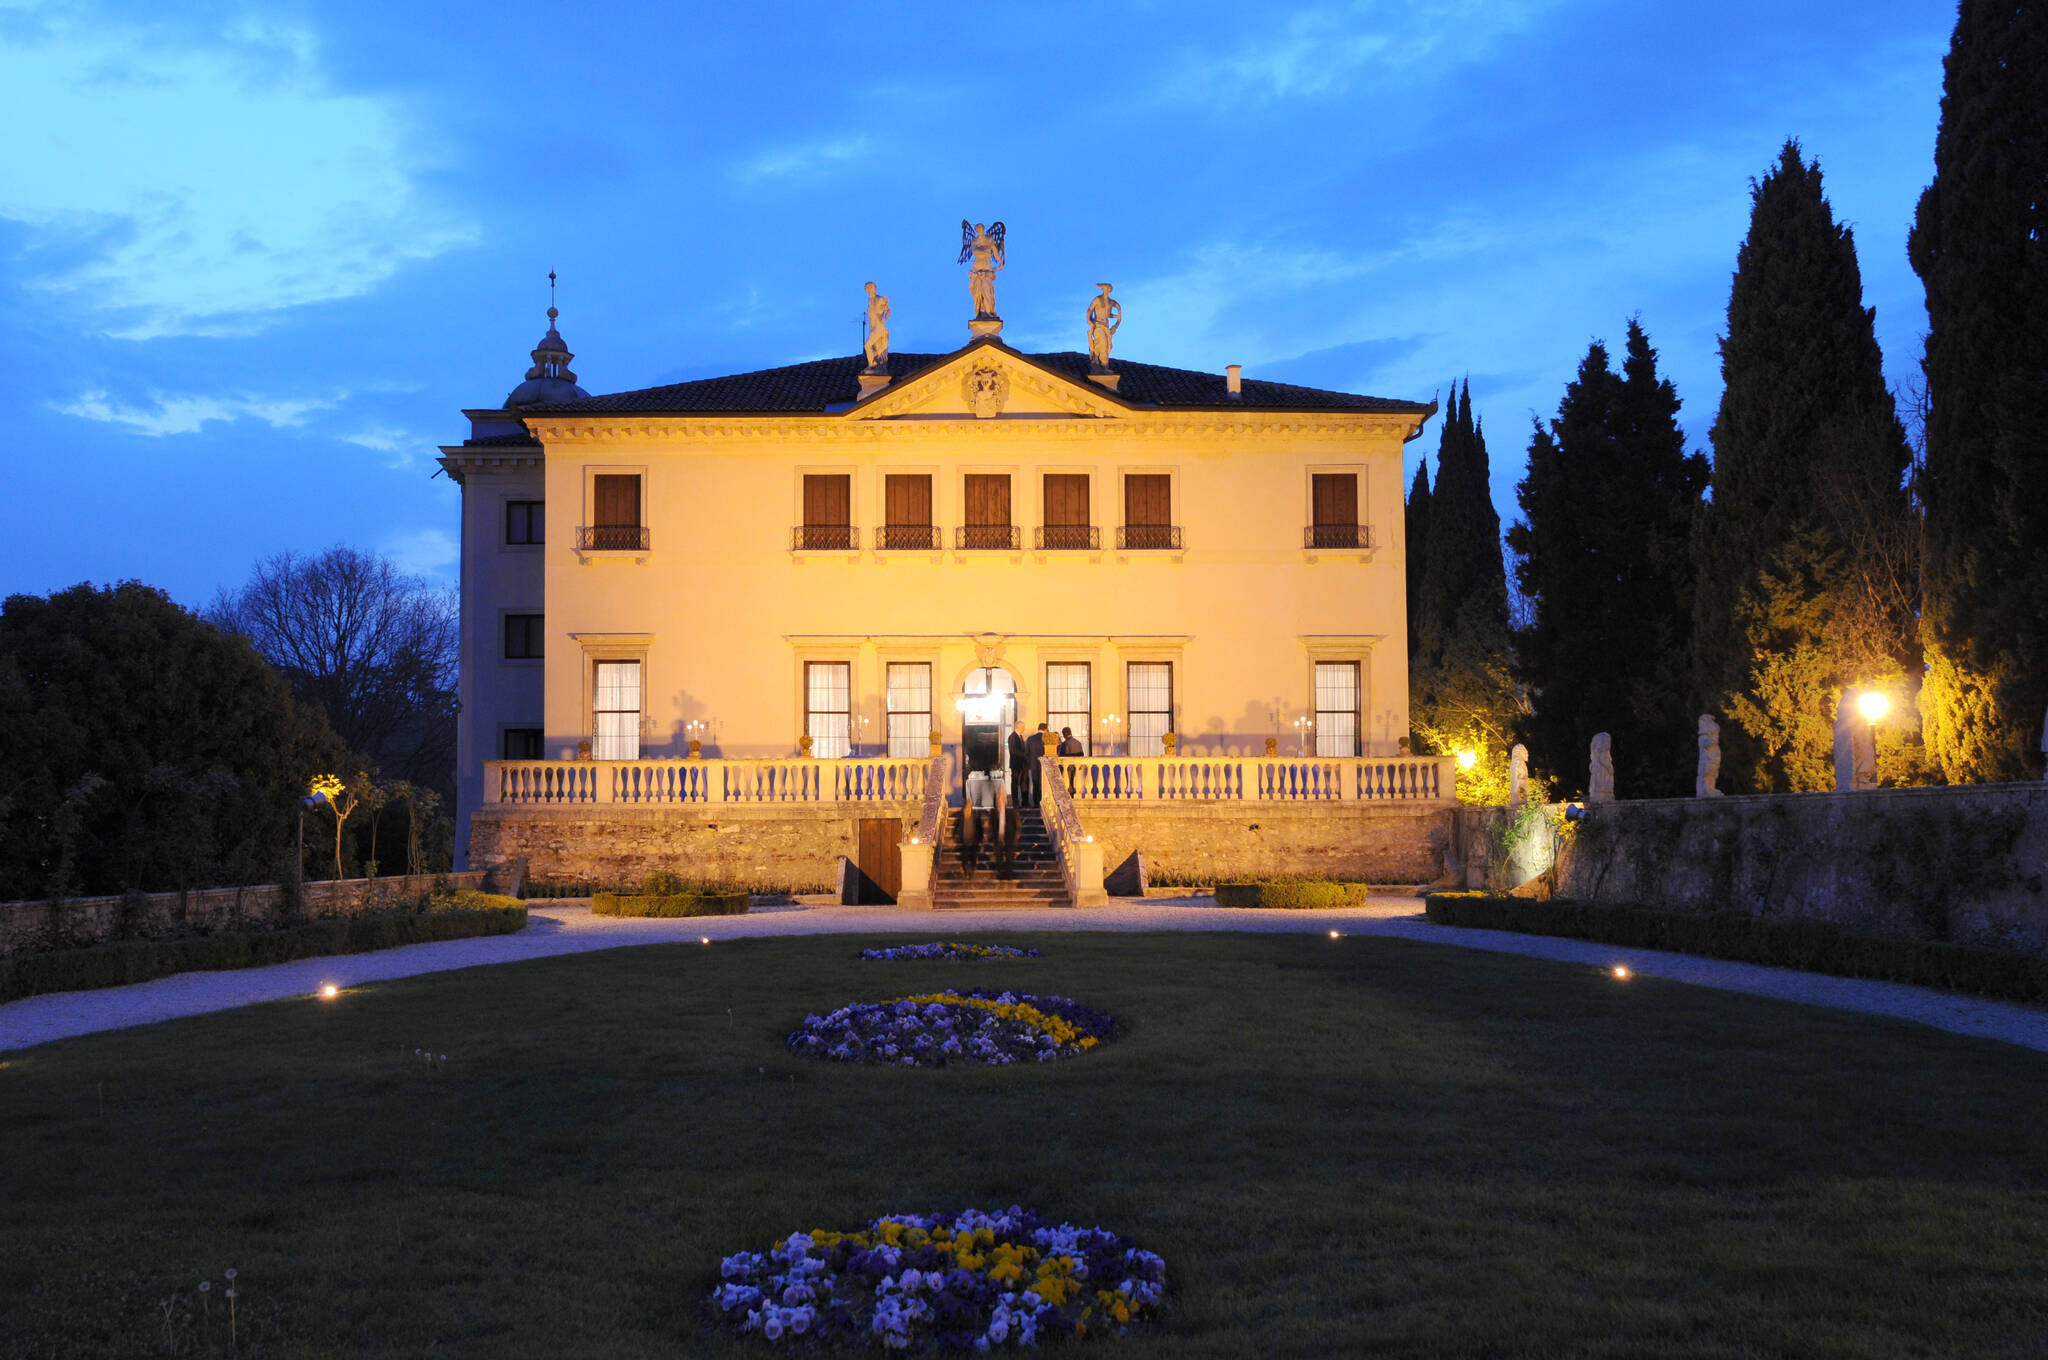 Vicenza: "Villa Valmarana ai Nani" Mistery and Legends